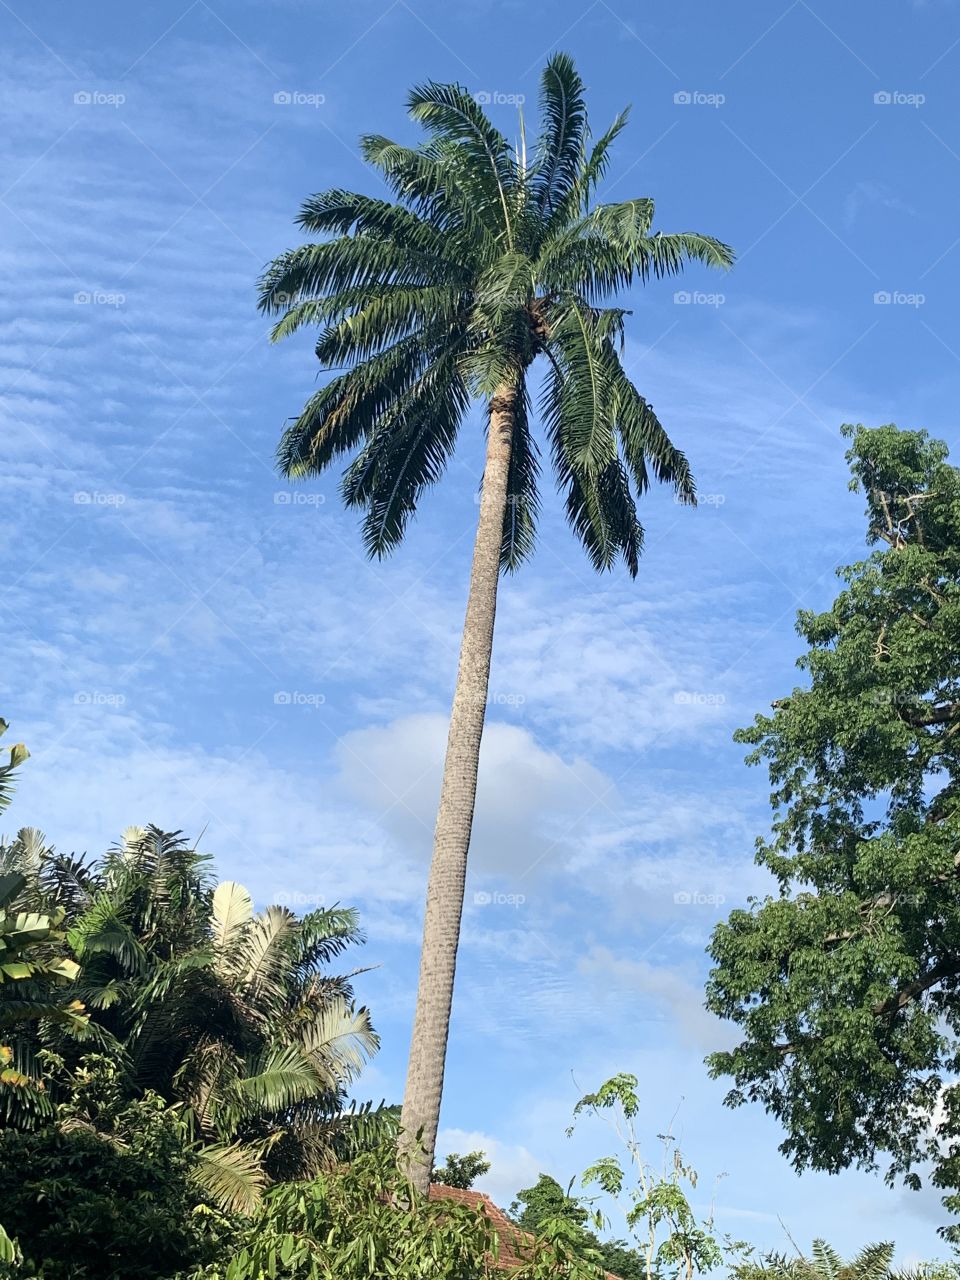 Singapore Botanic Gardens, palm trees and blue skies 